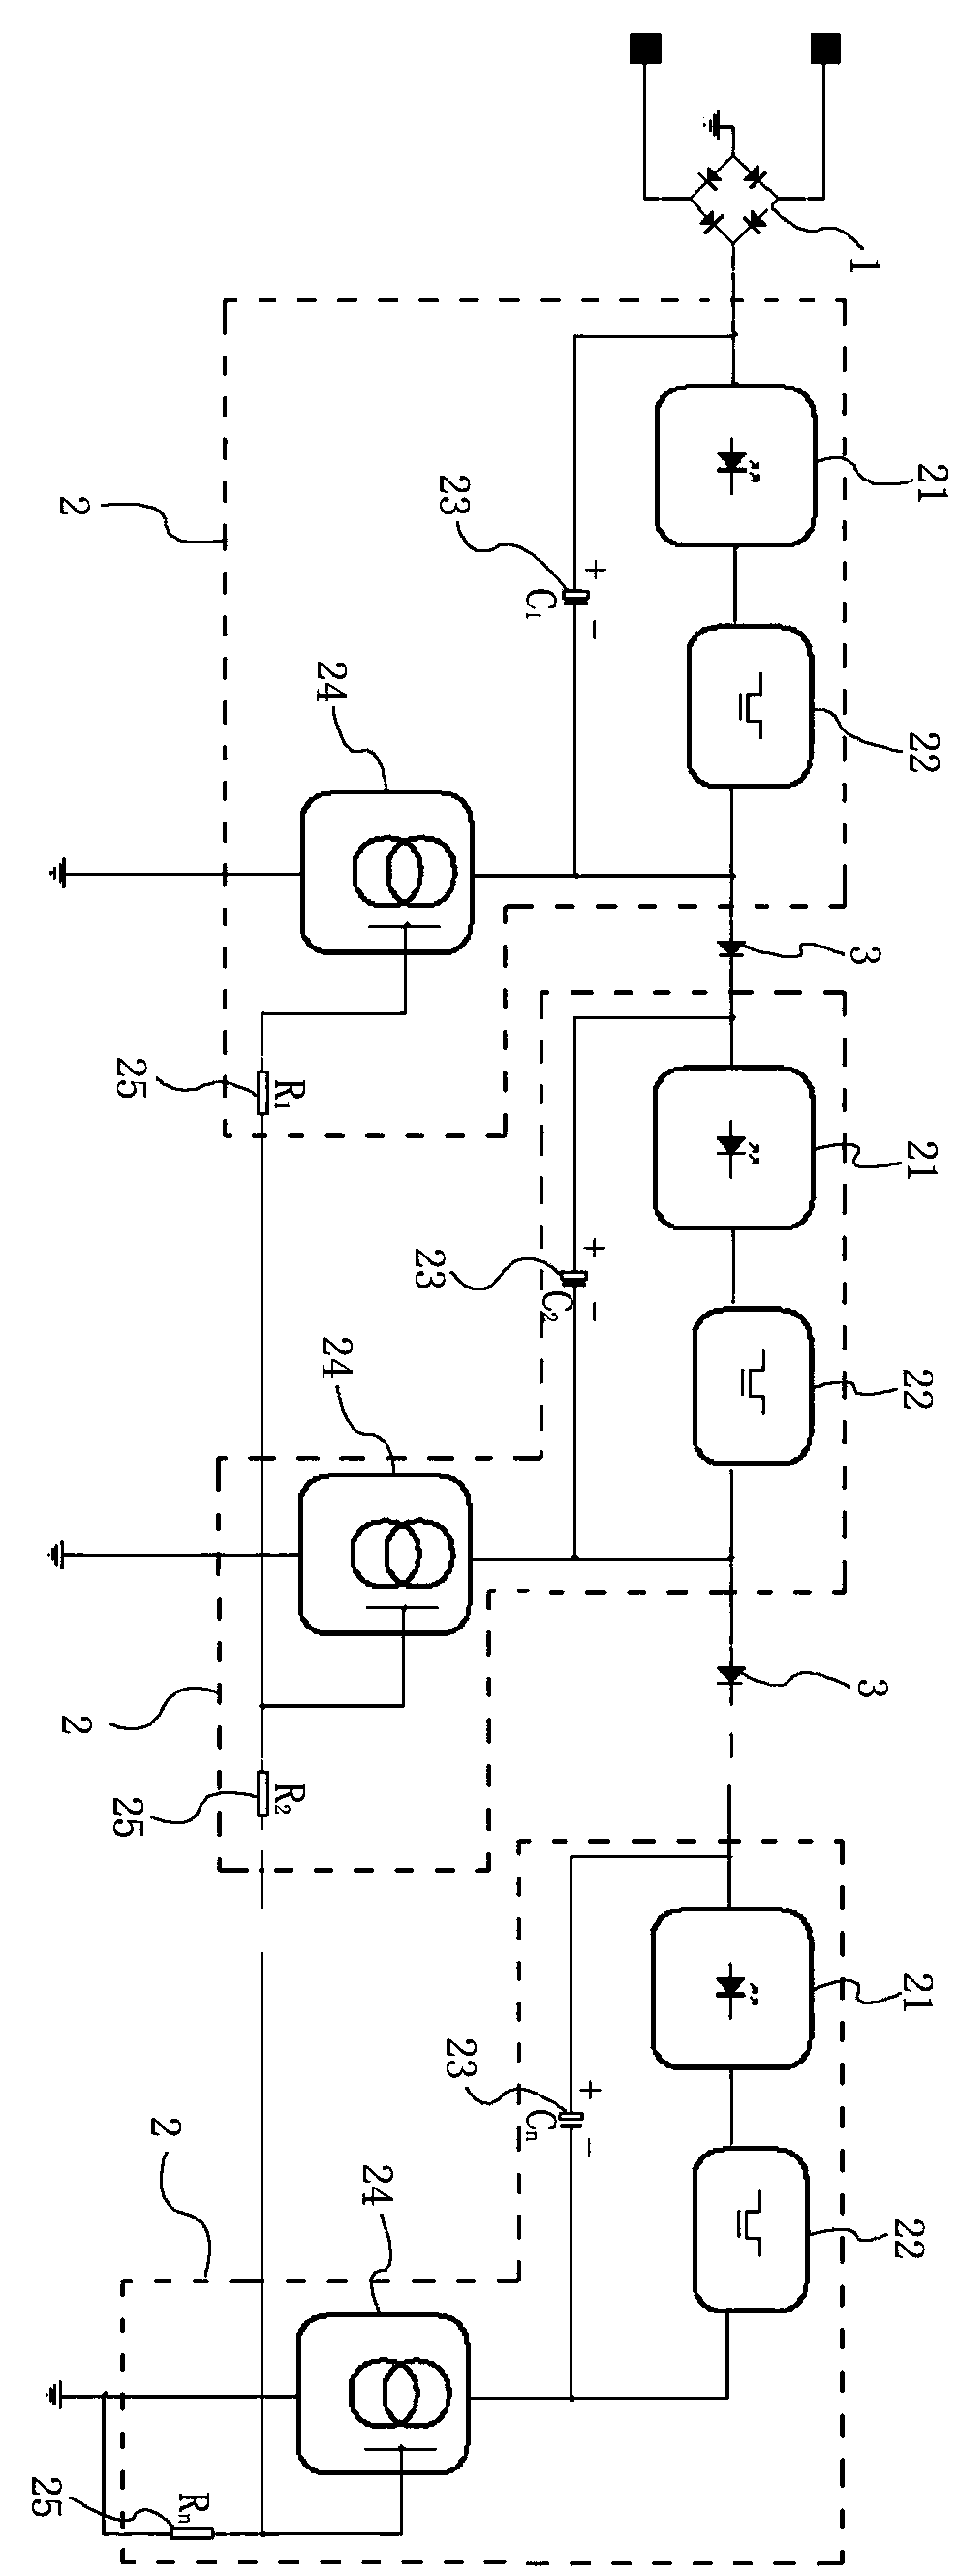 Linear high-power-factor driving circuit